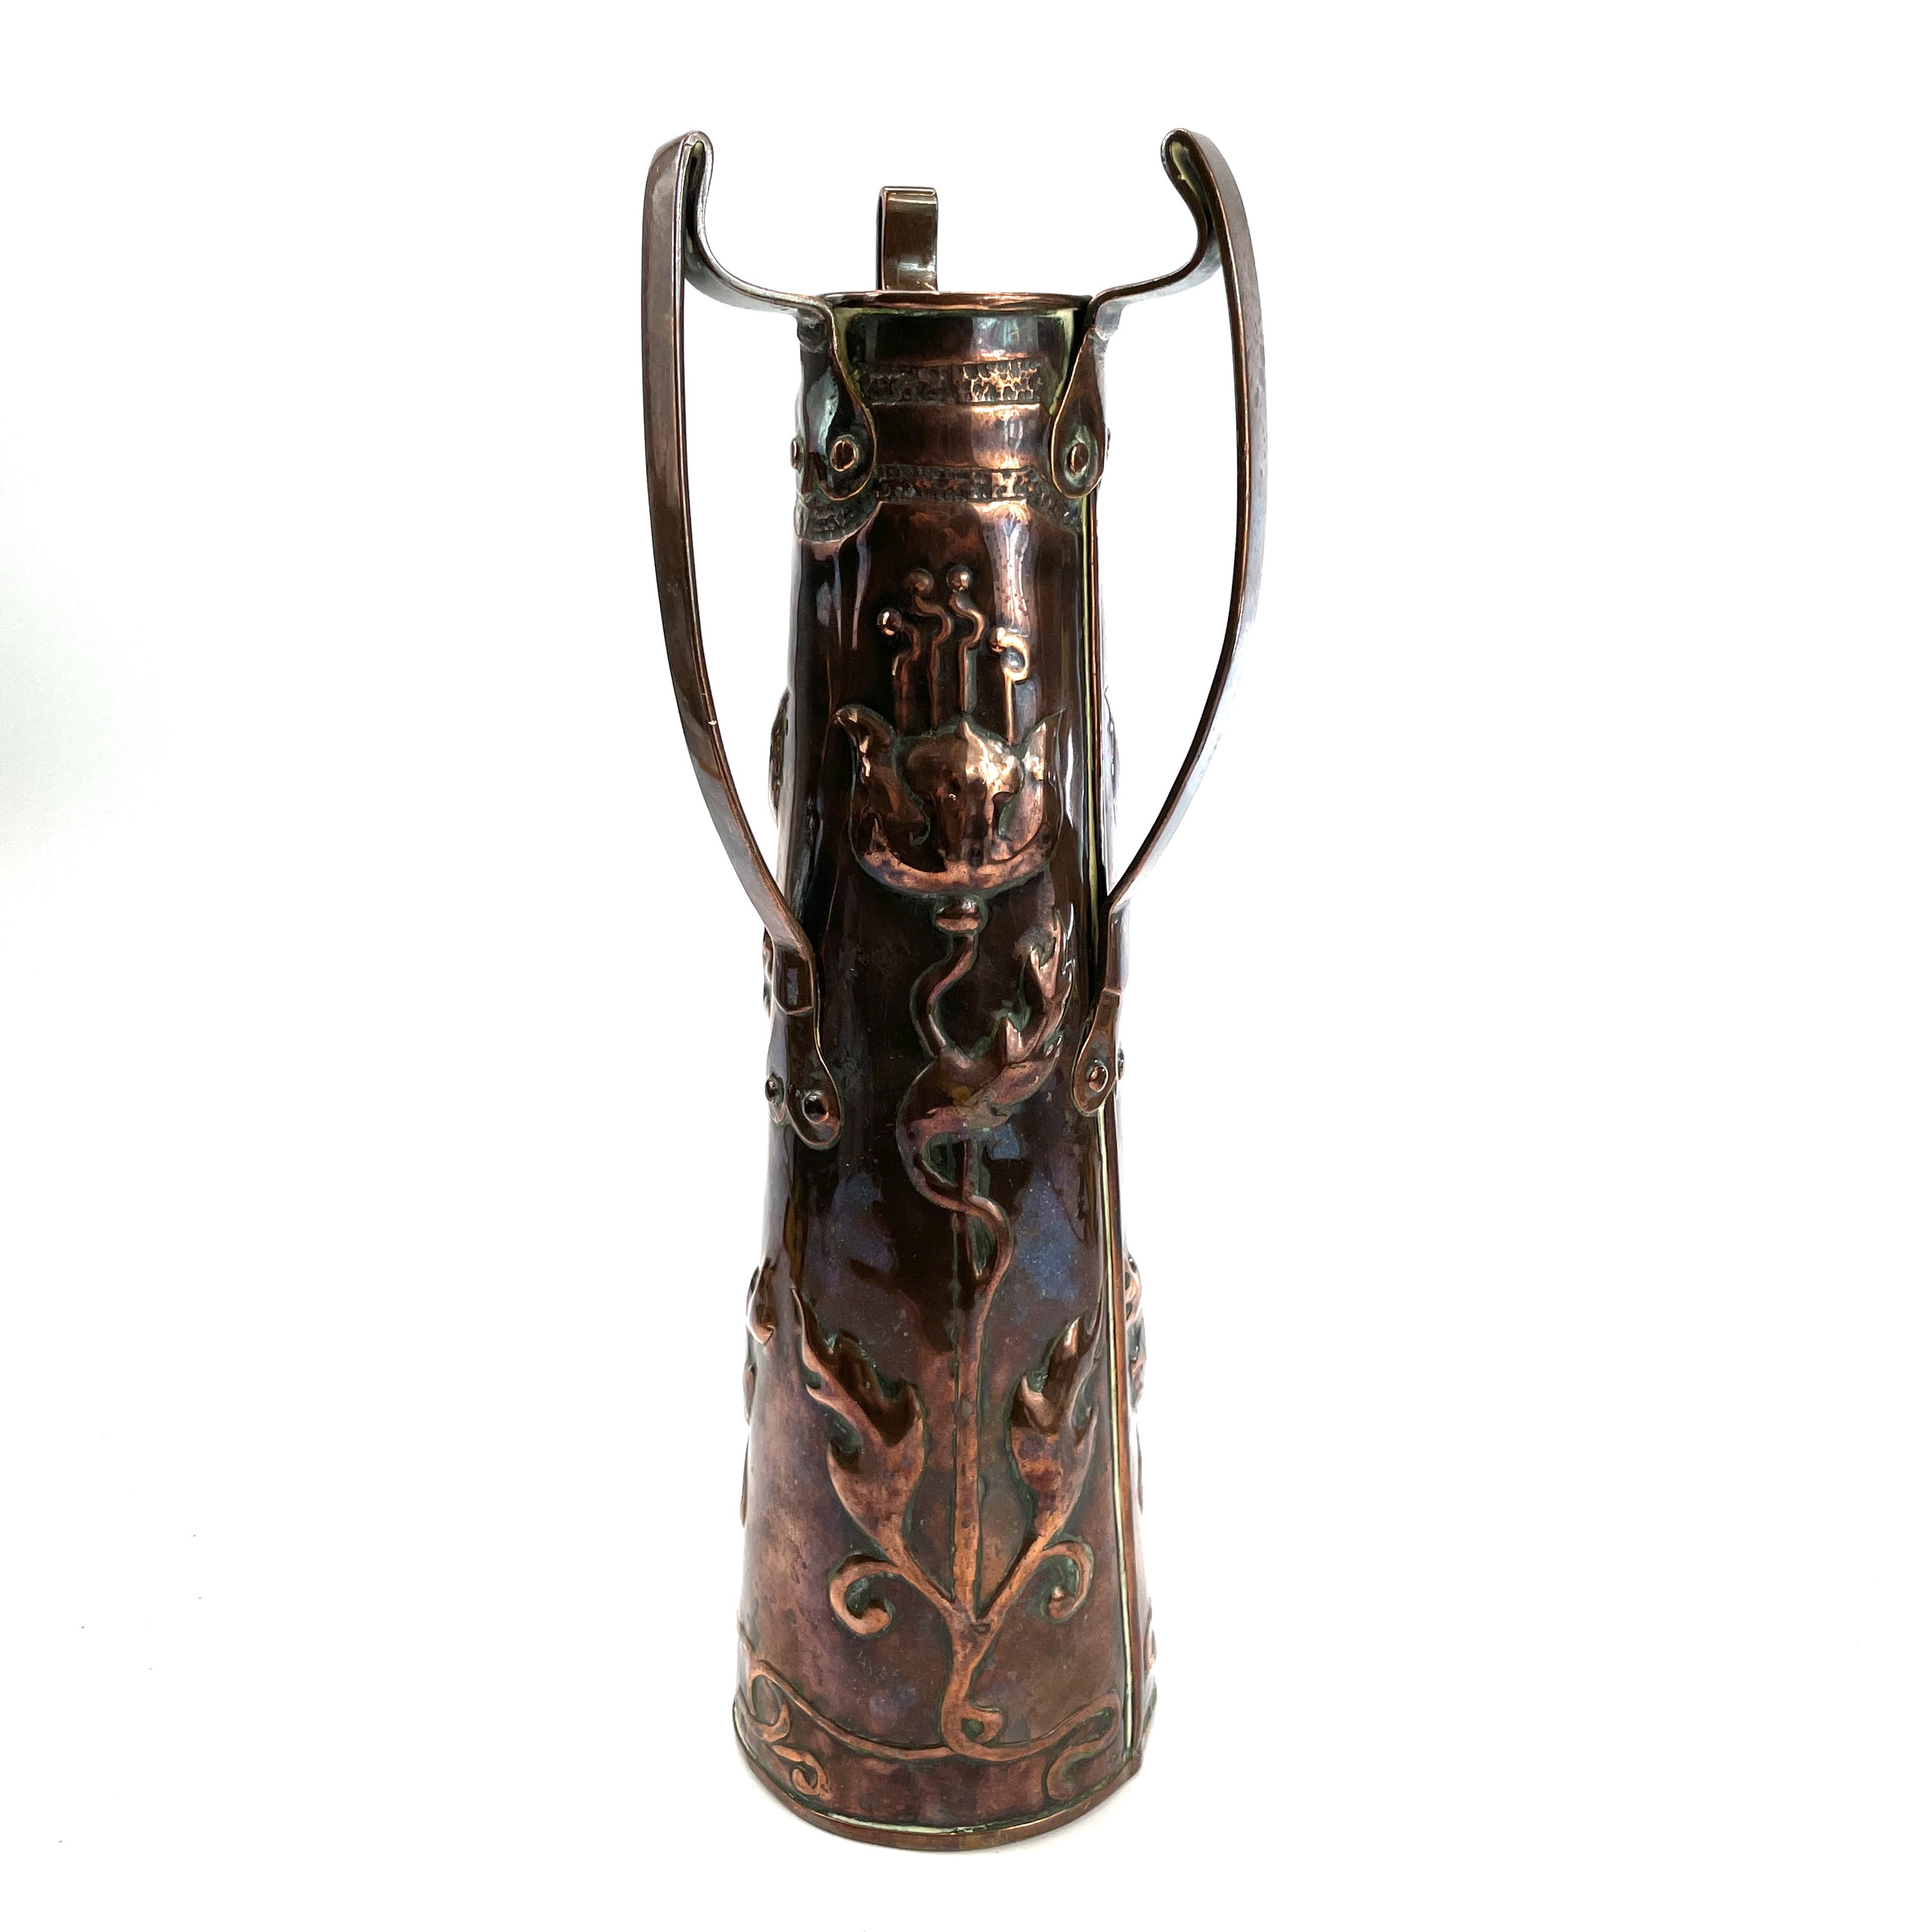 Lot 65 An Art Nouveau Copper Three Handle Vase With